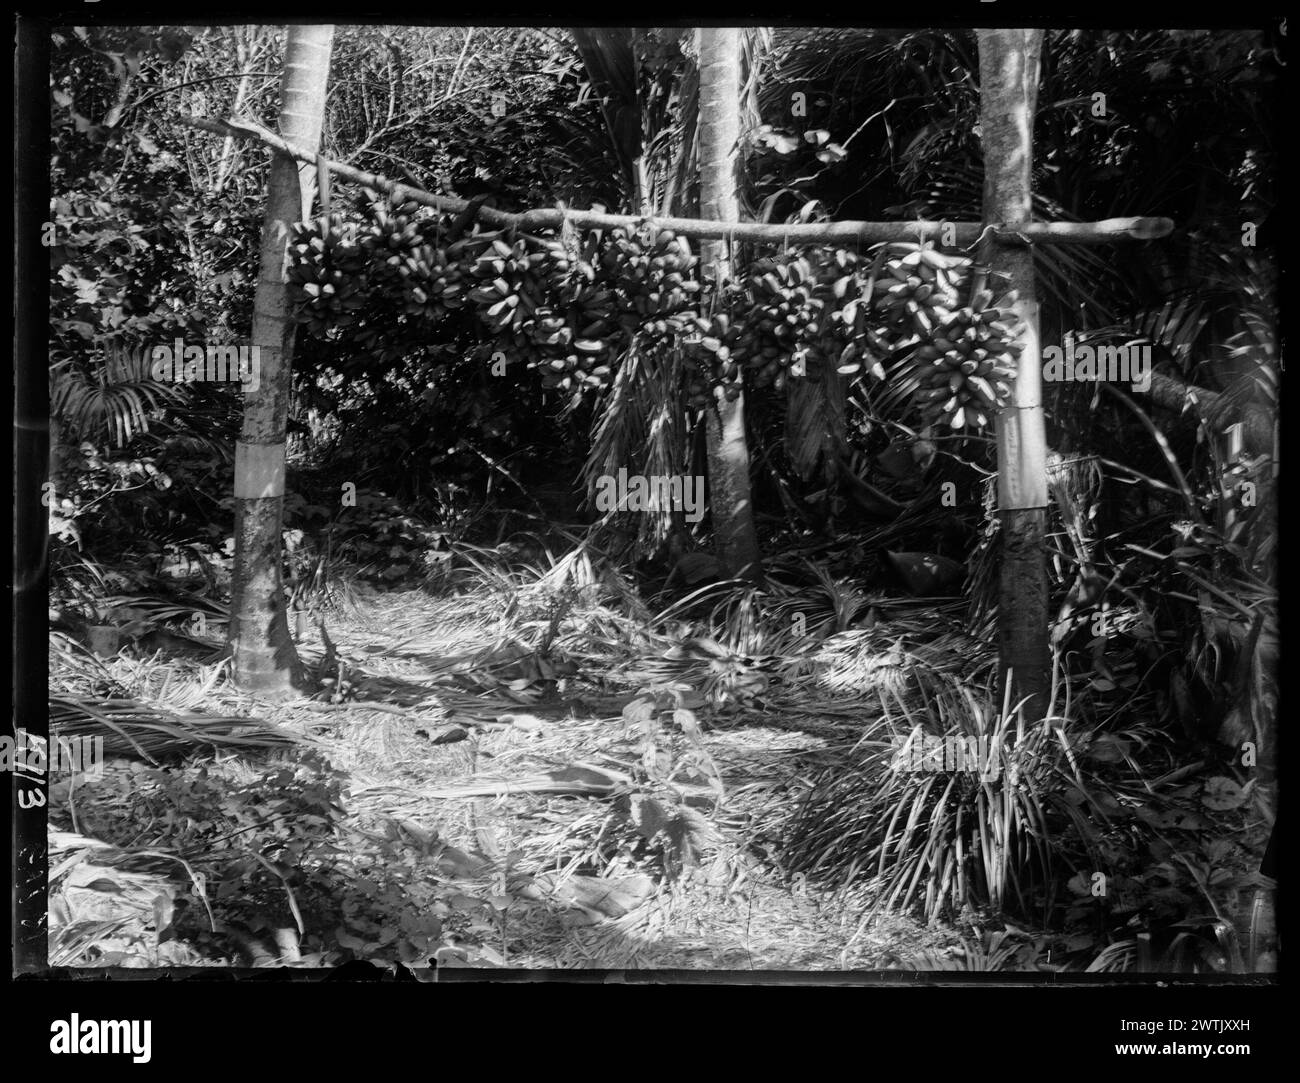 Whata built of 2 Nikau palms, bananas ripening black-and-white negatives Stock Photo